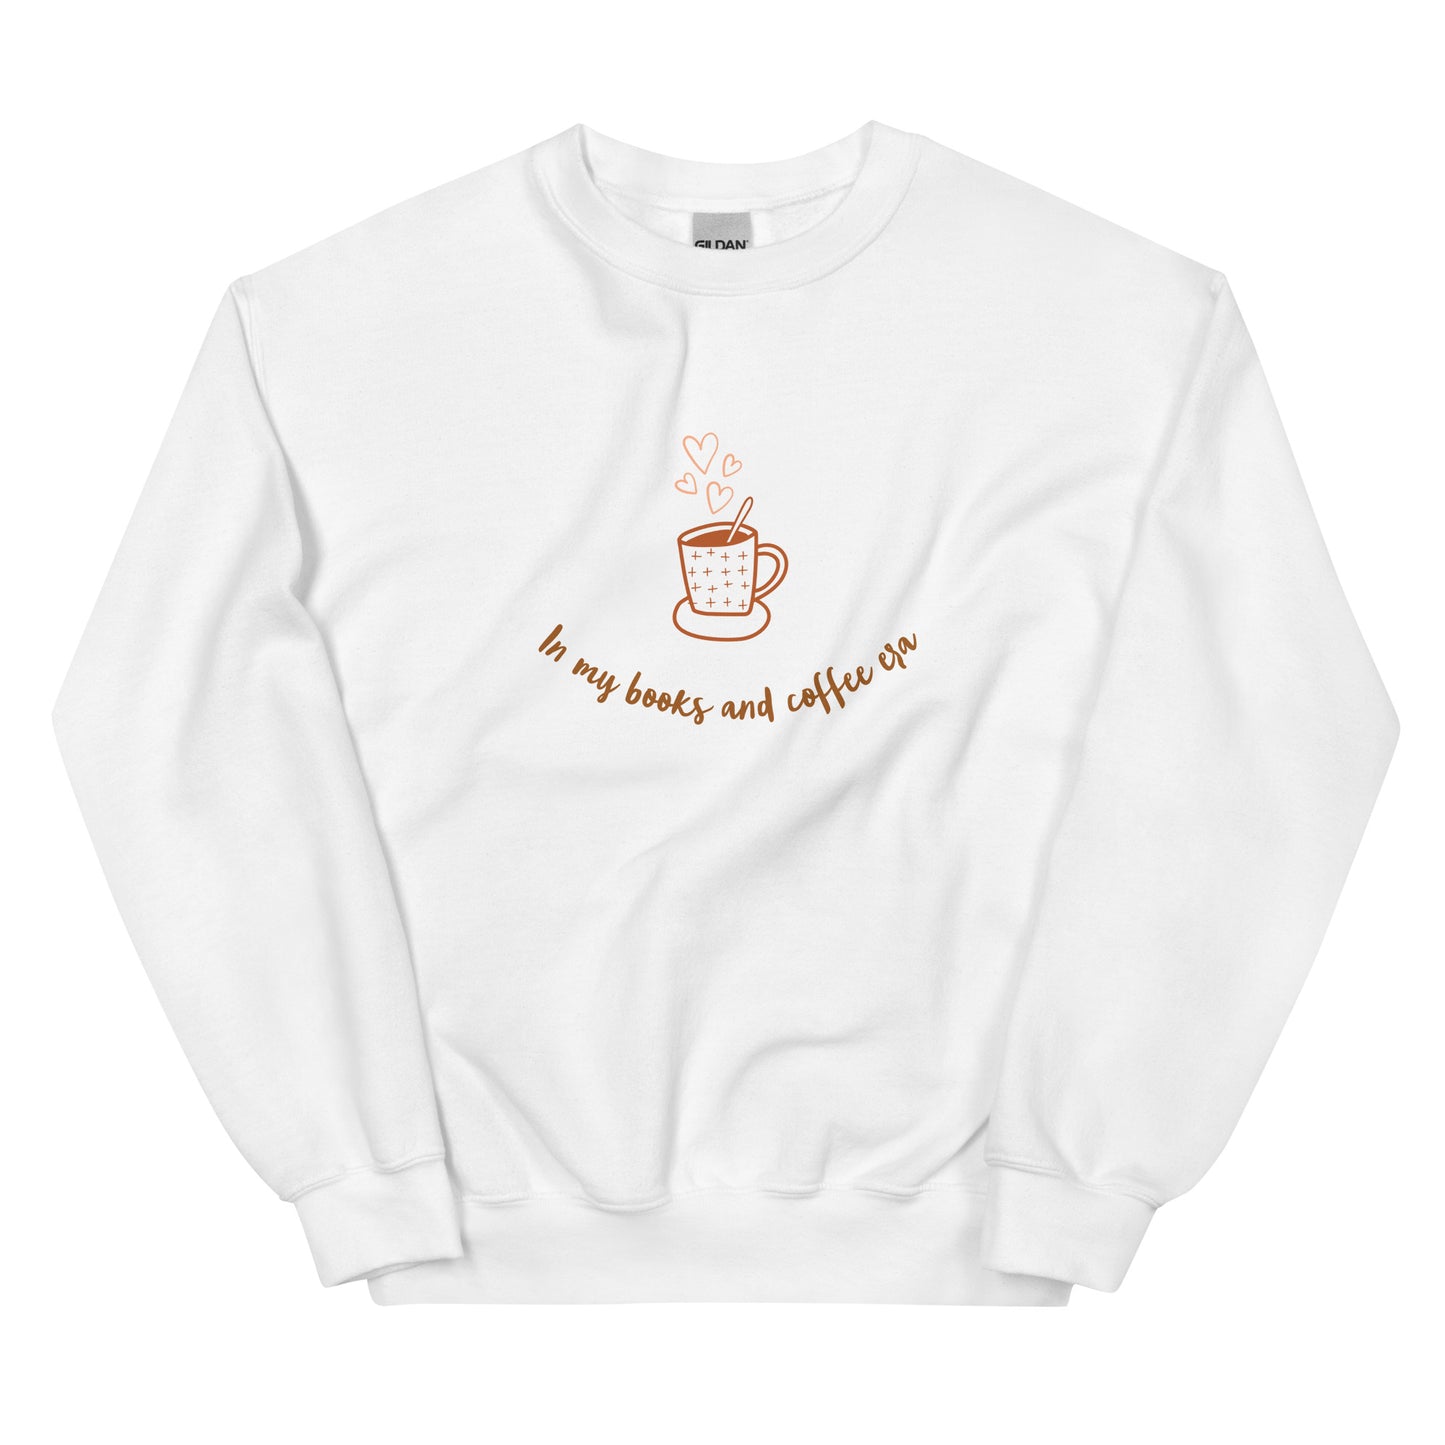 Books and Coffee Unisex Sweatshirt